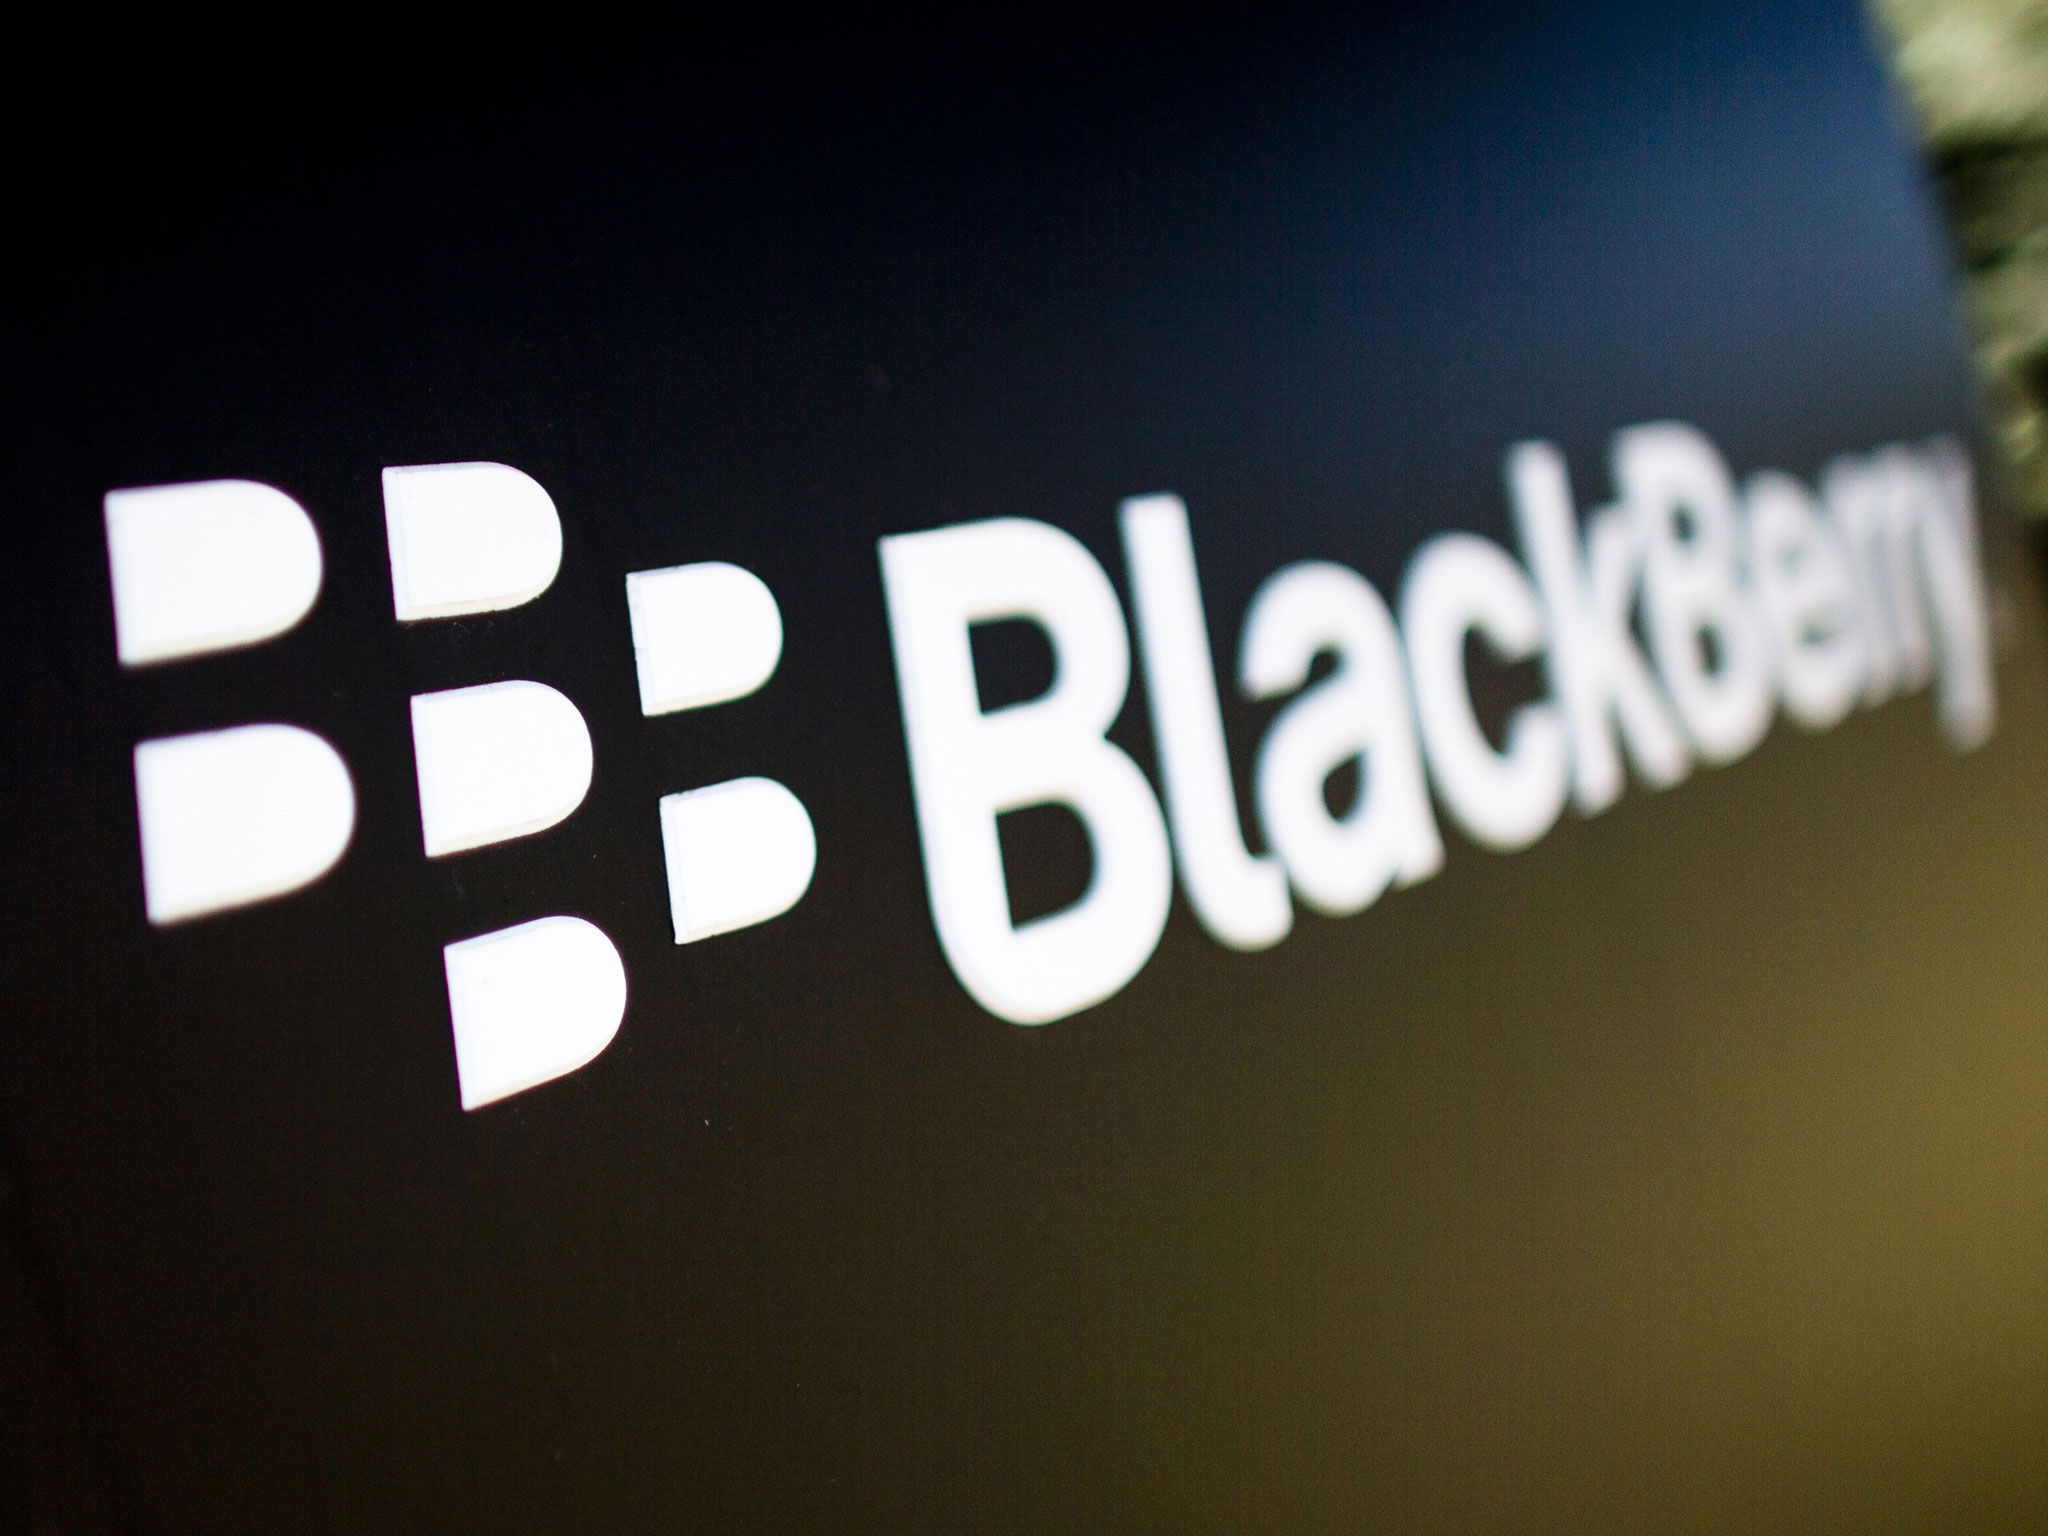 BlackBerry comeback needs earnings validation: corporate Canada